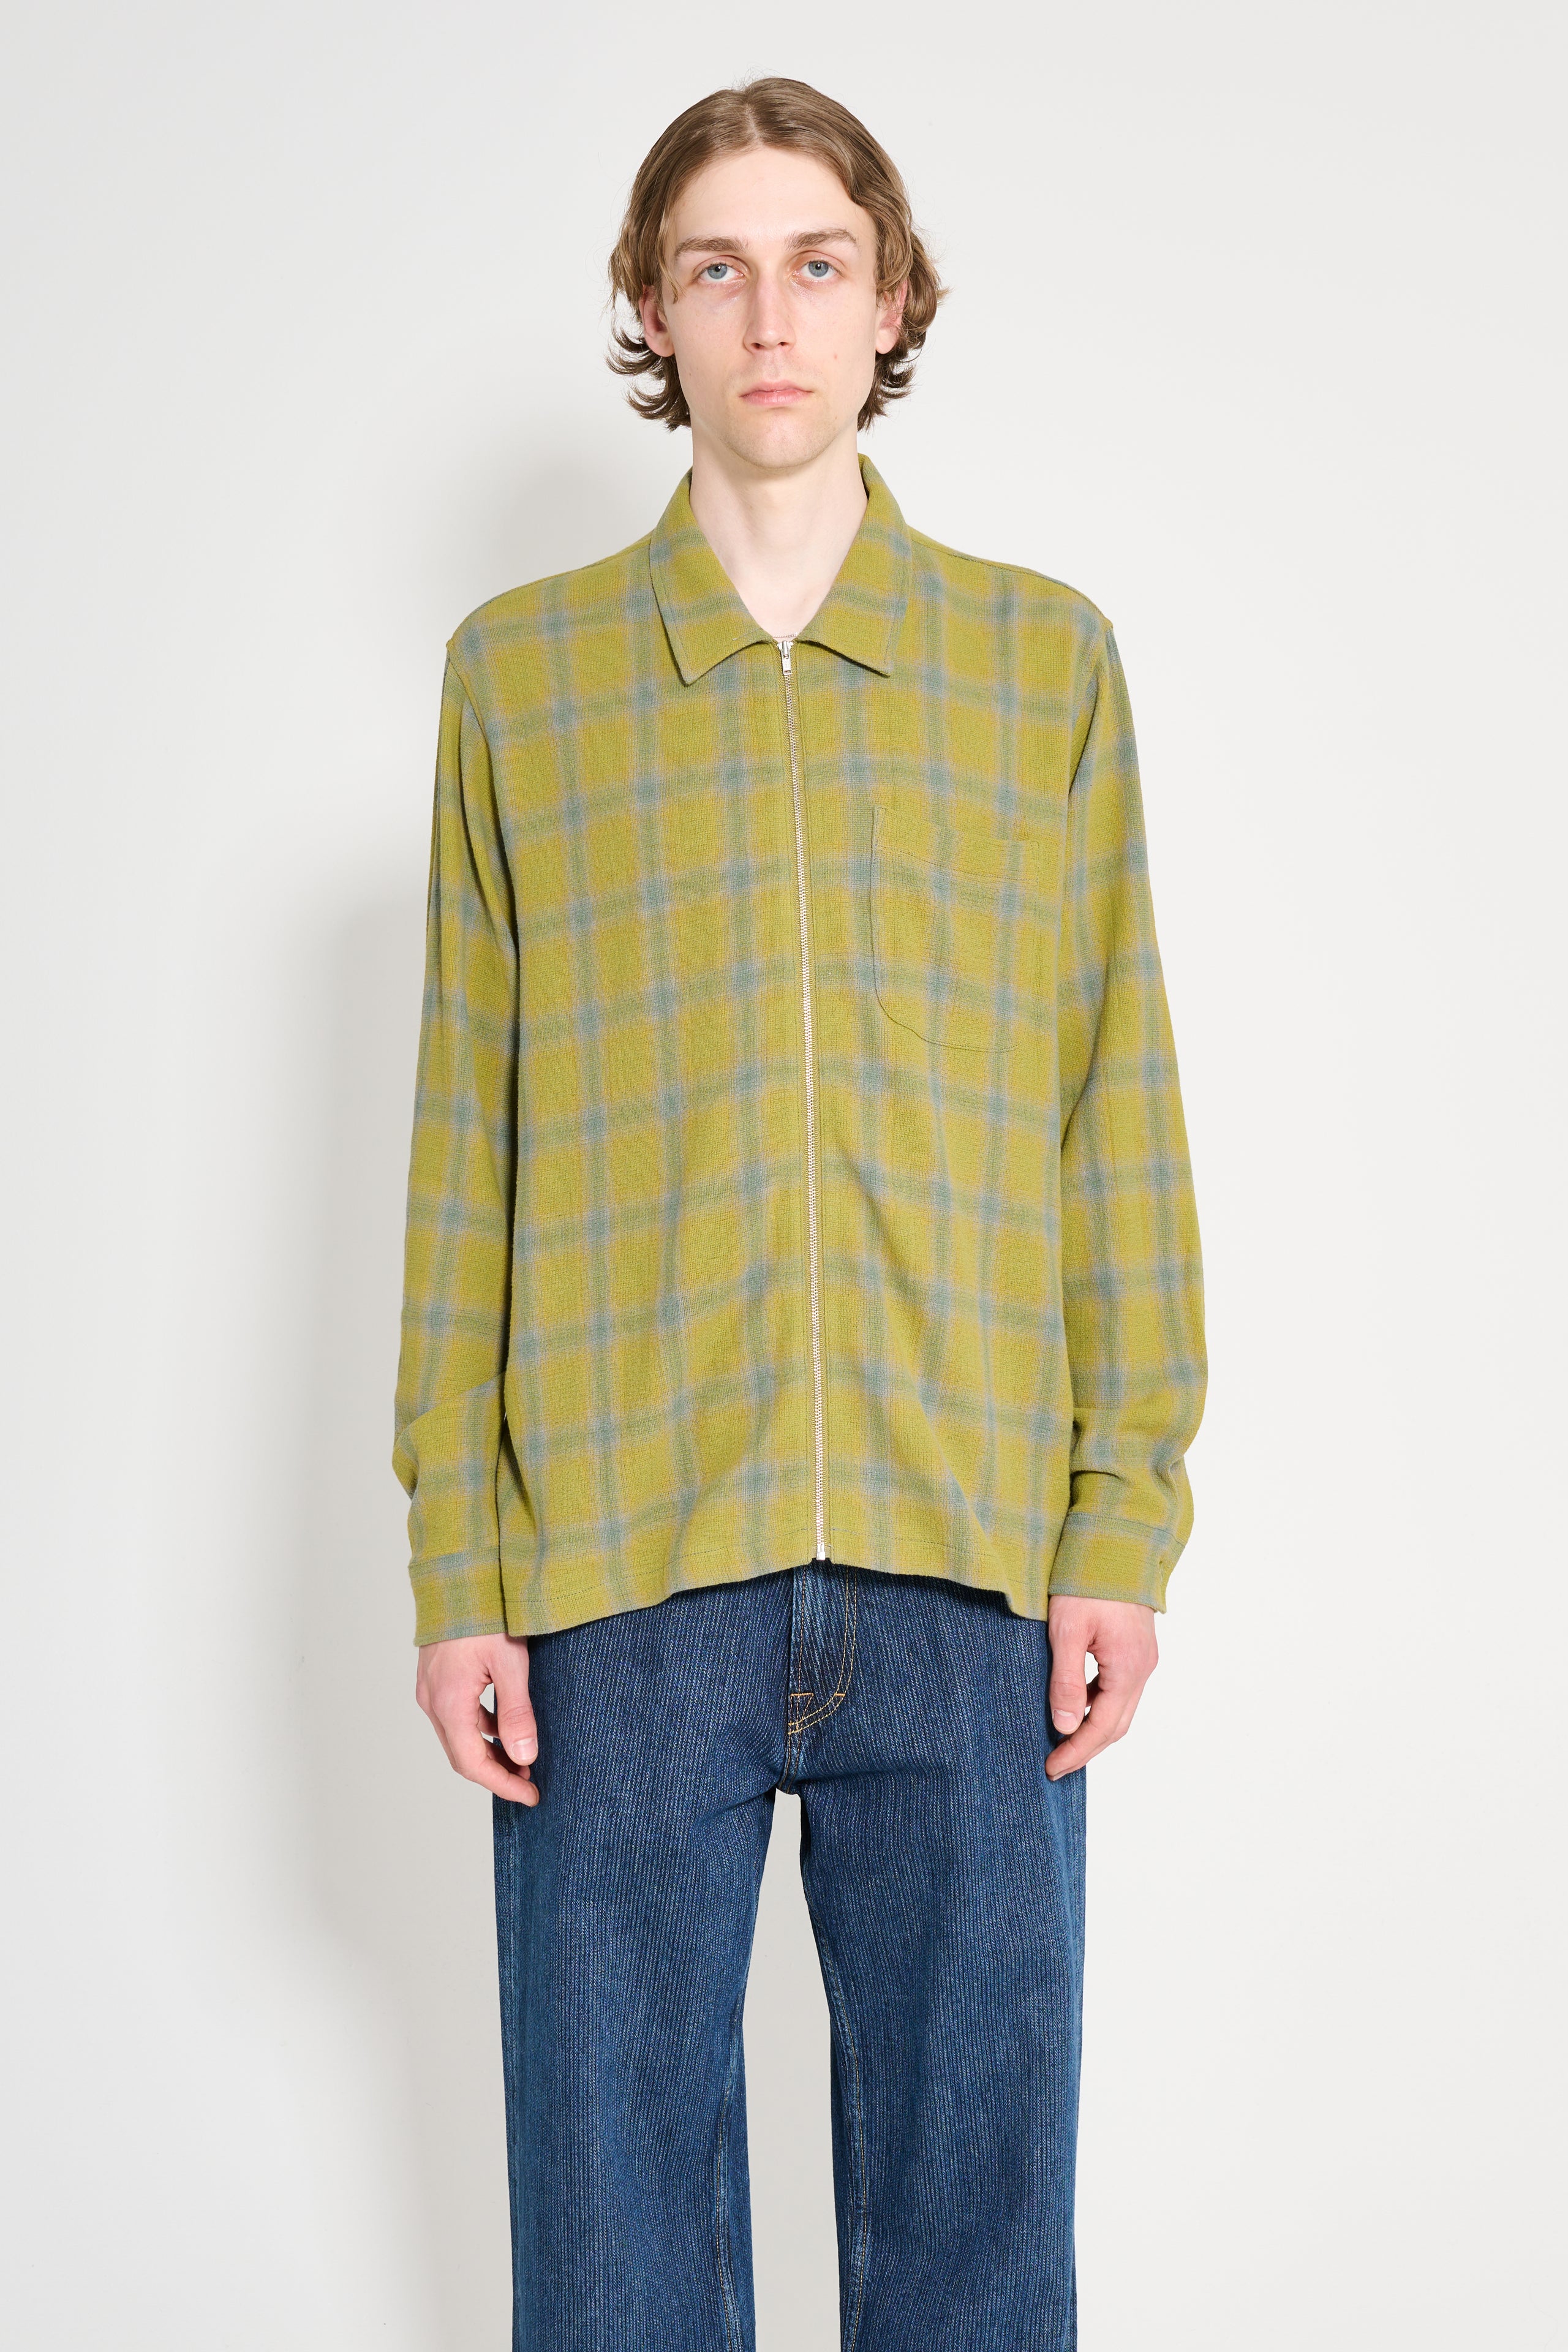 Stüssy Zip Shirt Twisted Yarn Plaid Green